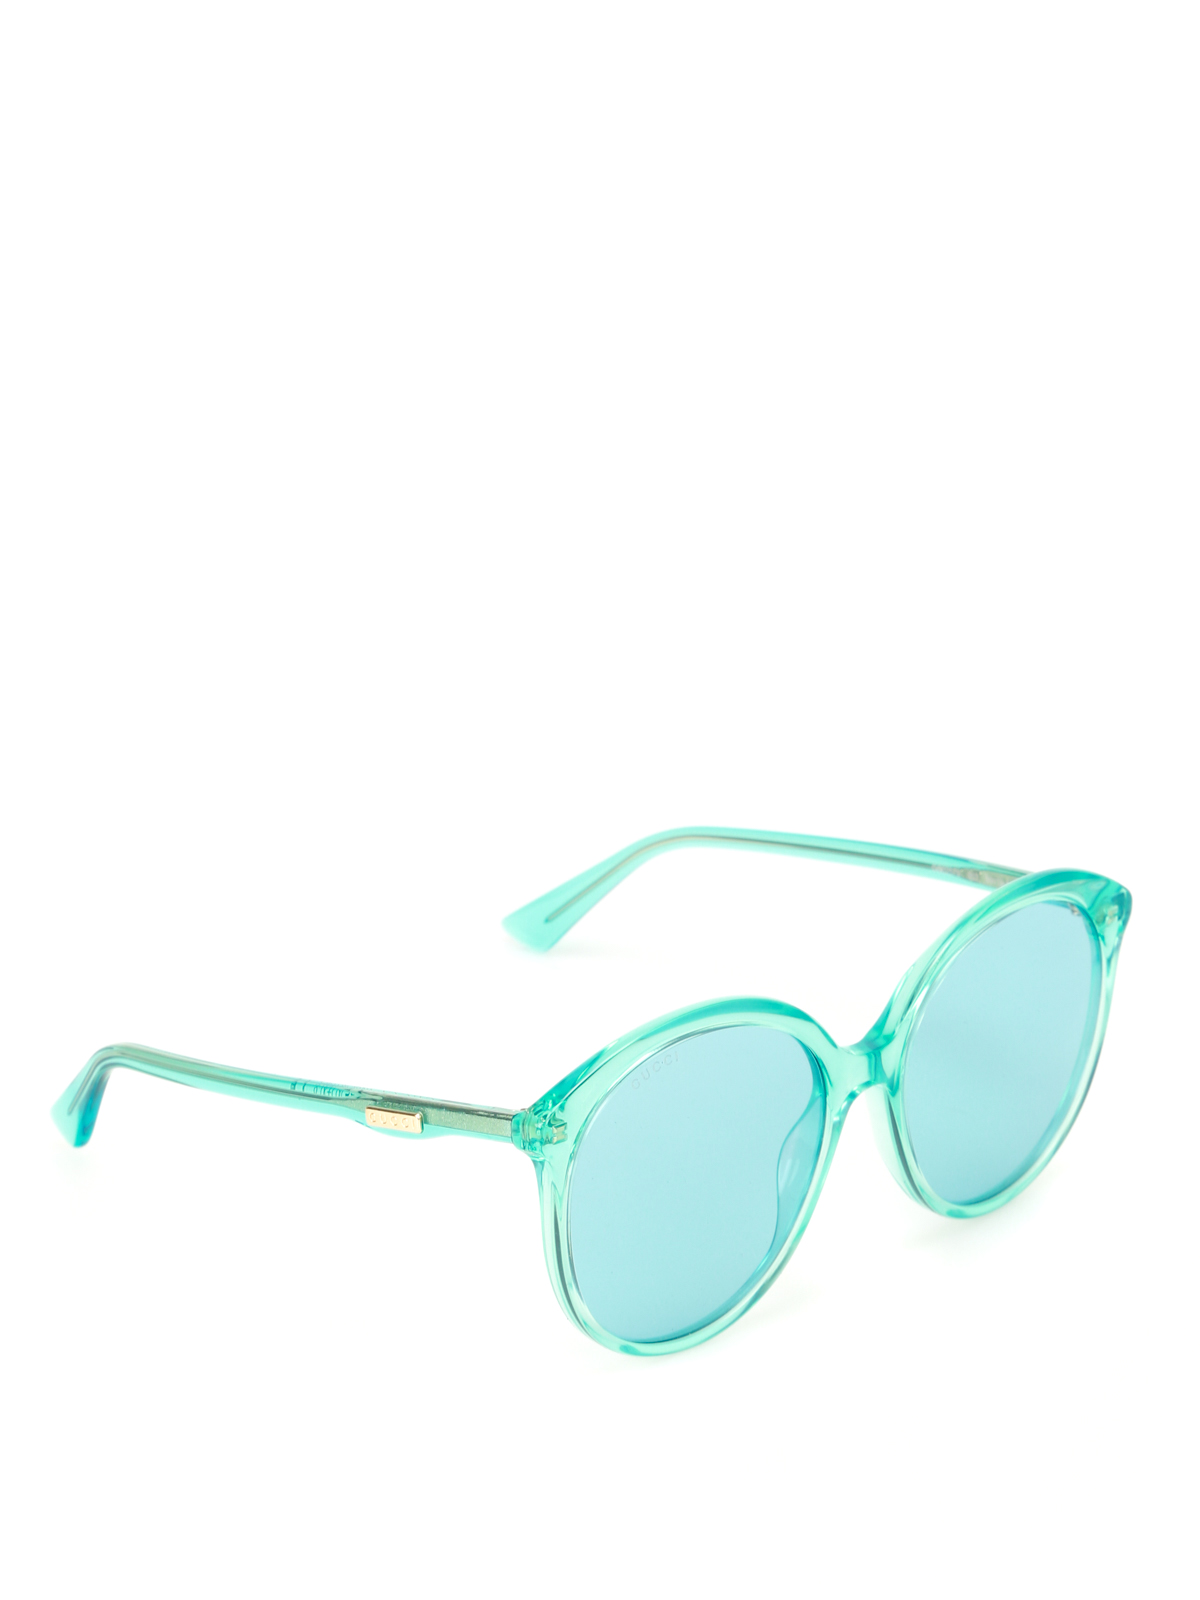 Gucci - Light blue oversized sunglasses 